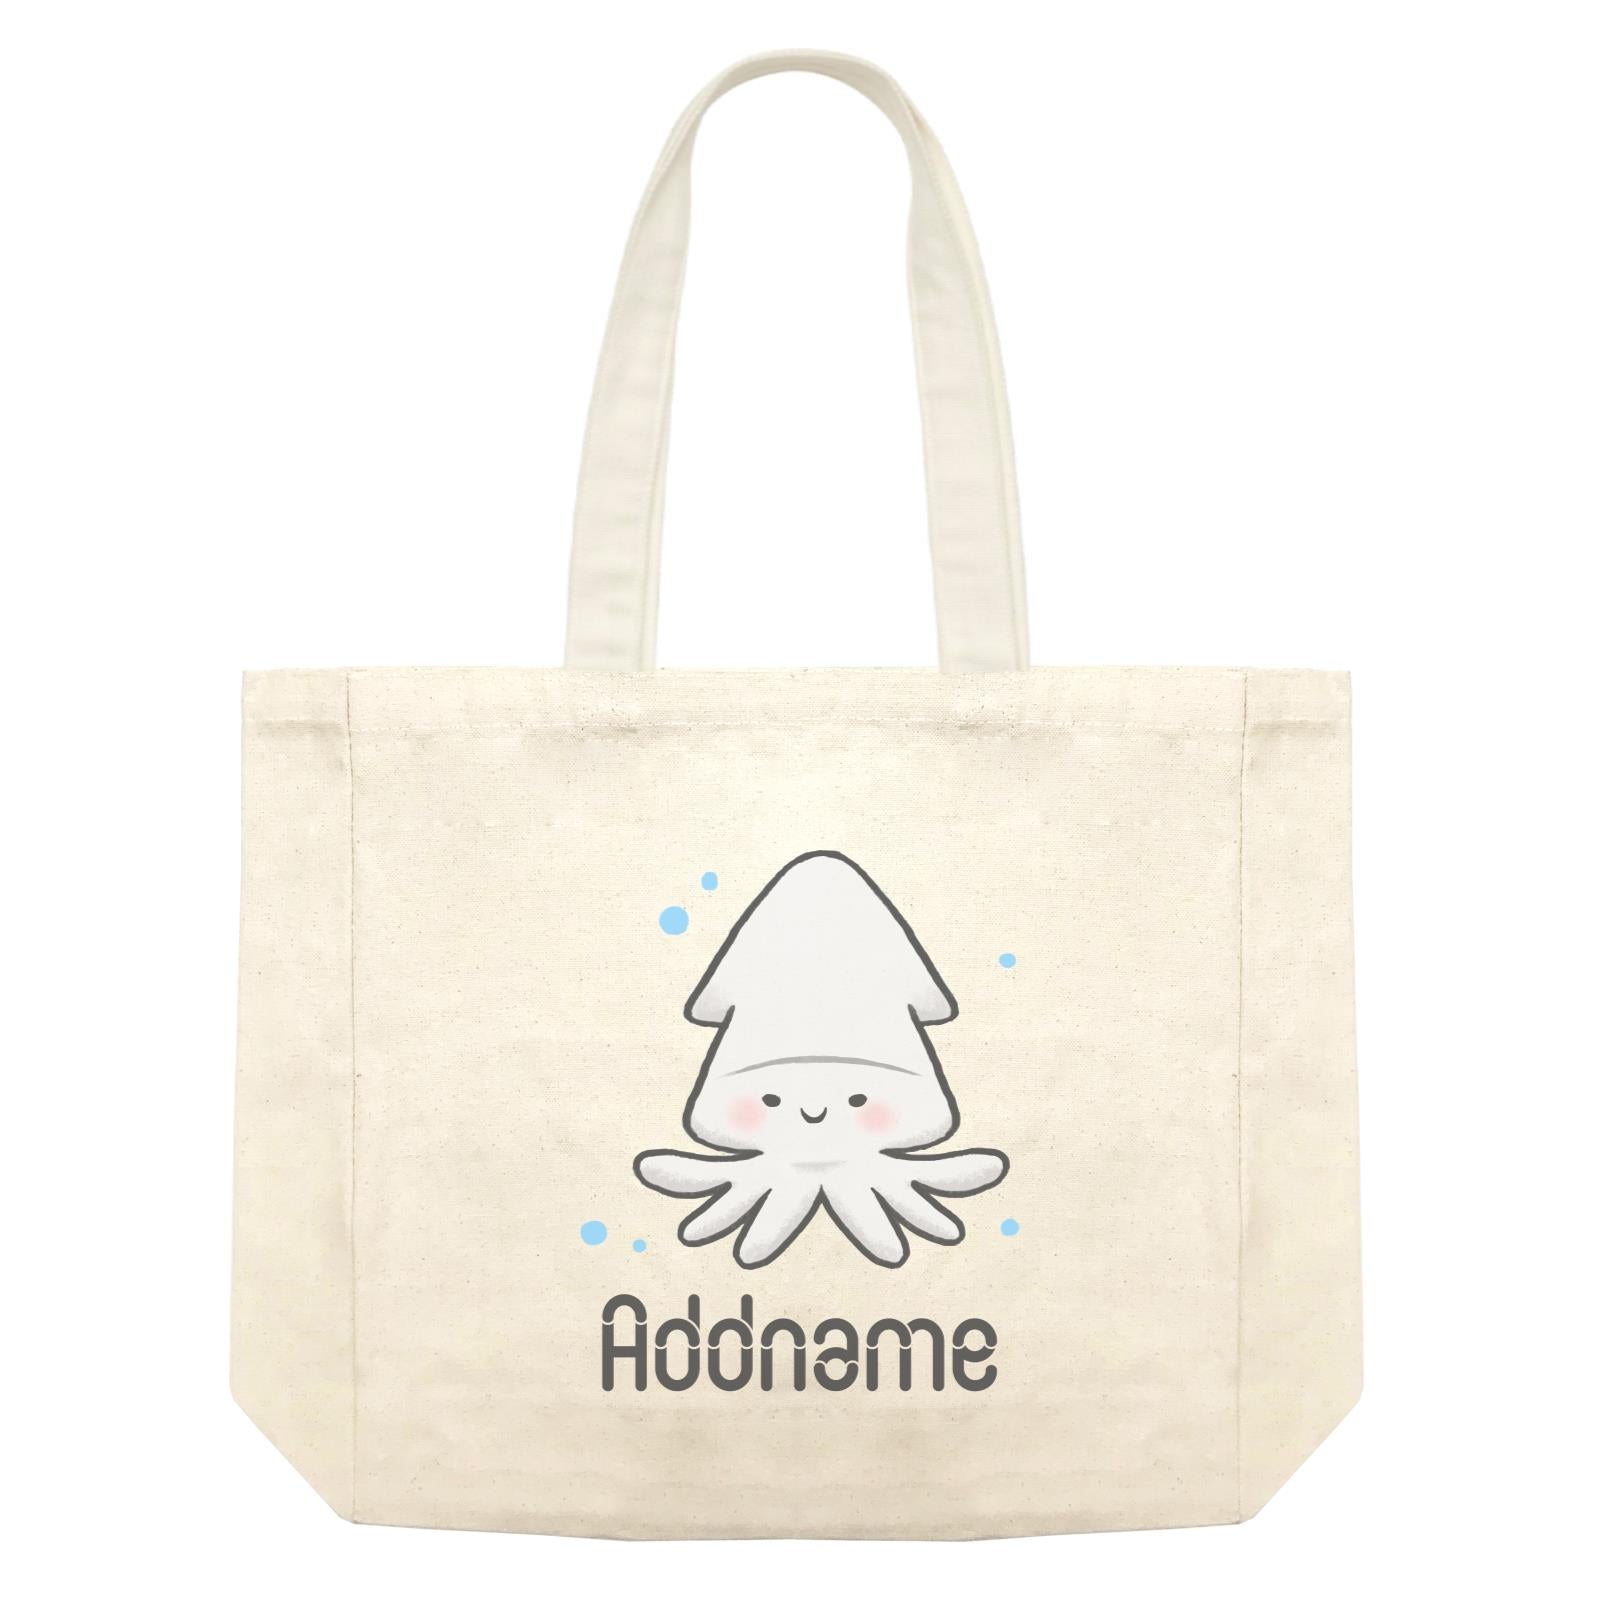 Cute Hand Drawn Style Squid Addname Shopping Bag